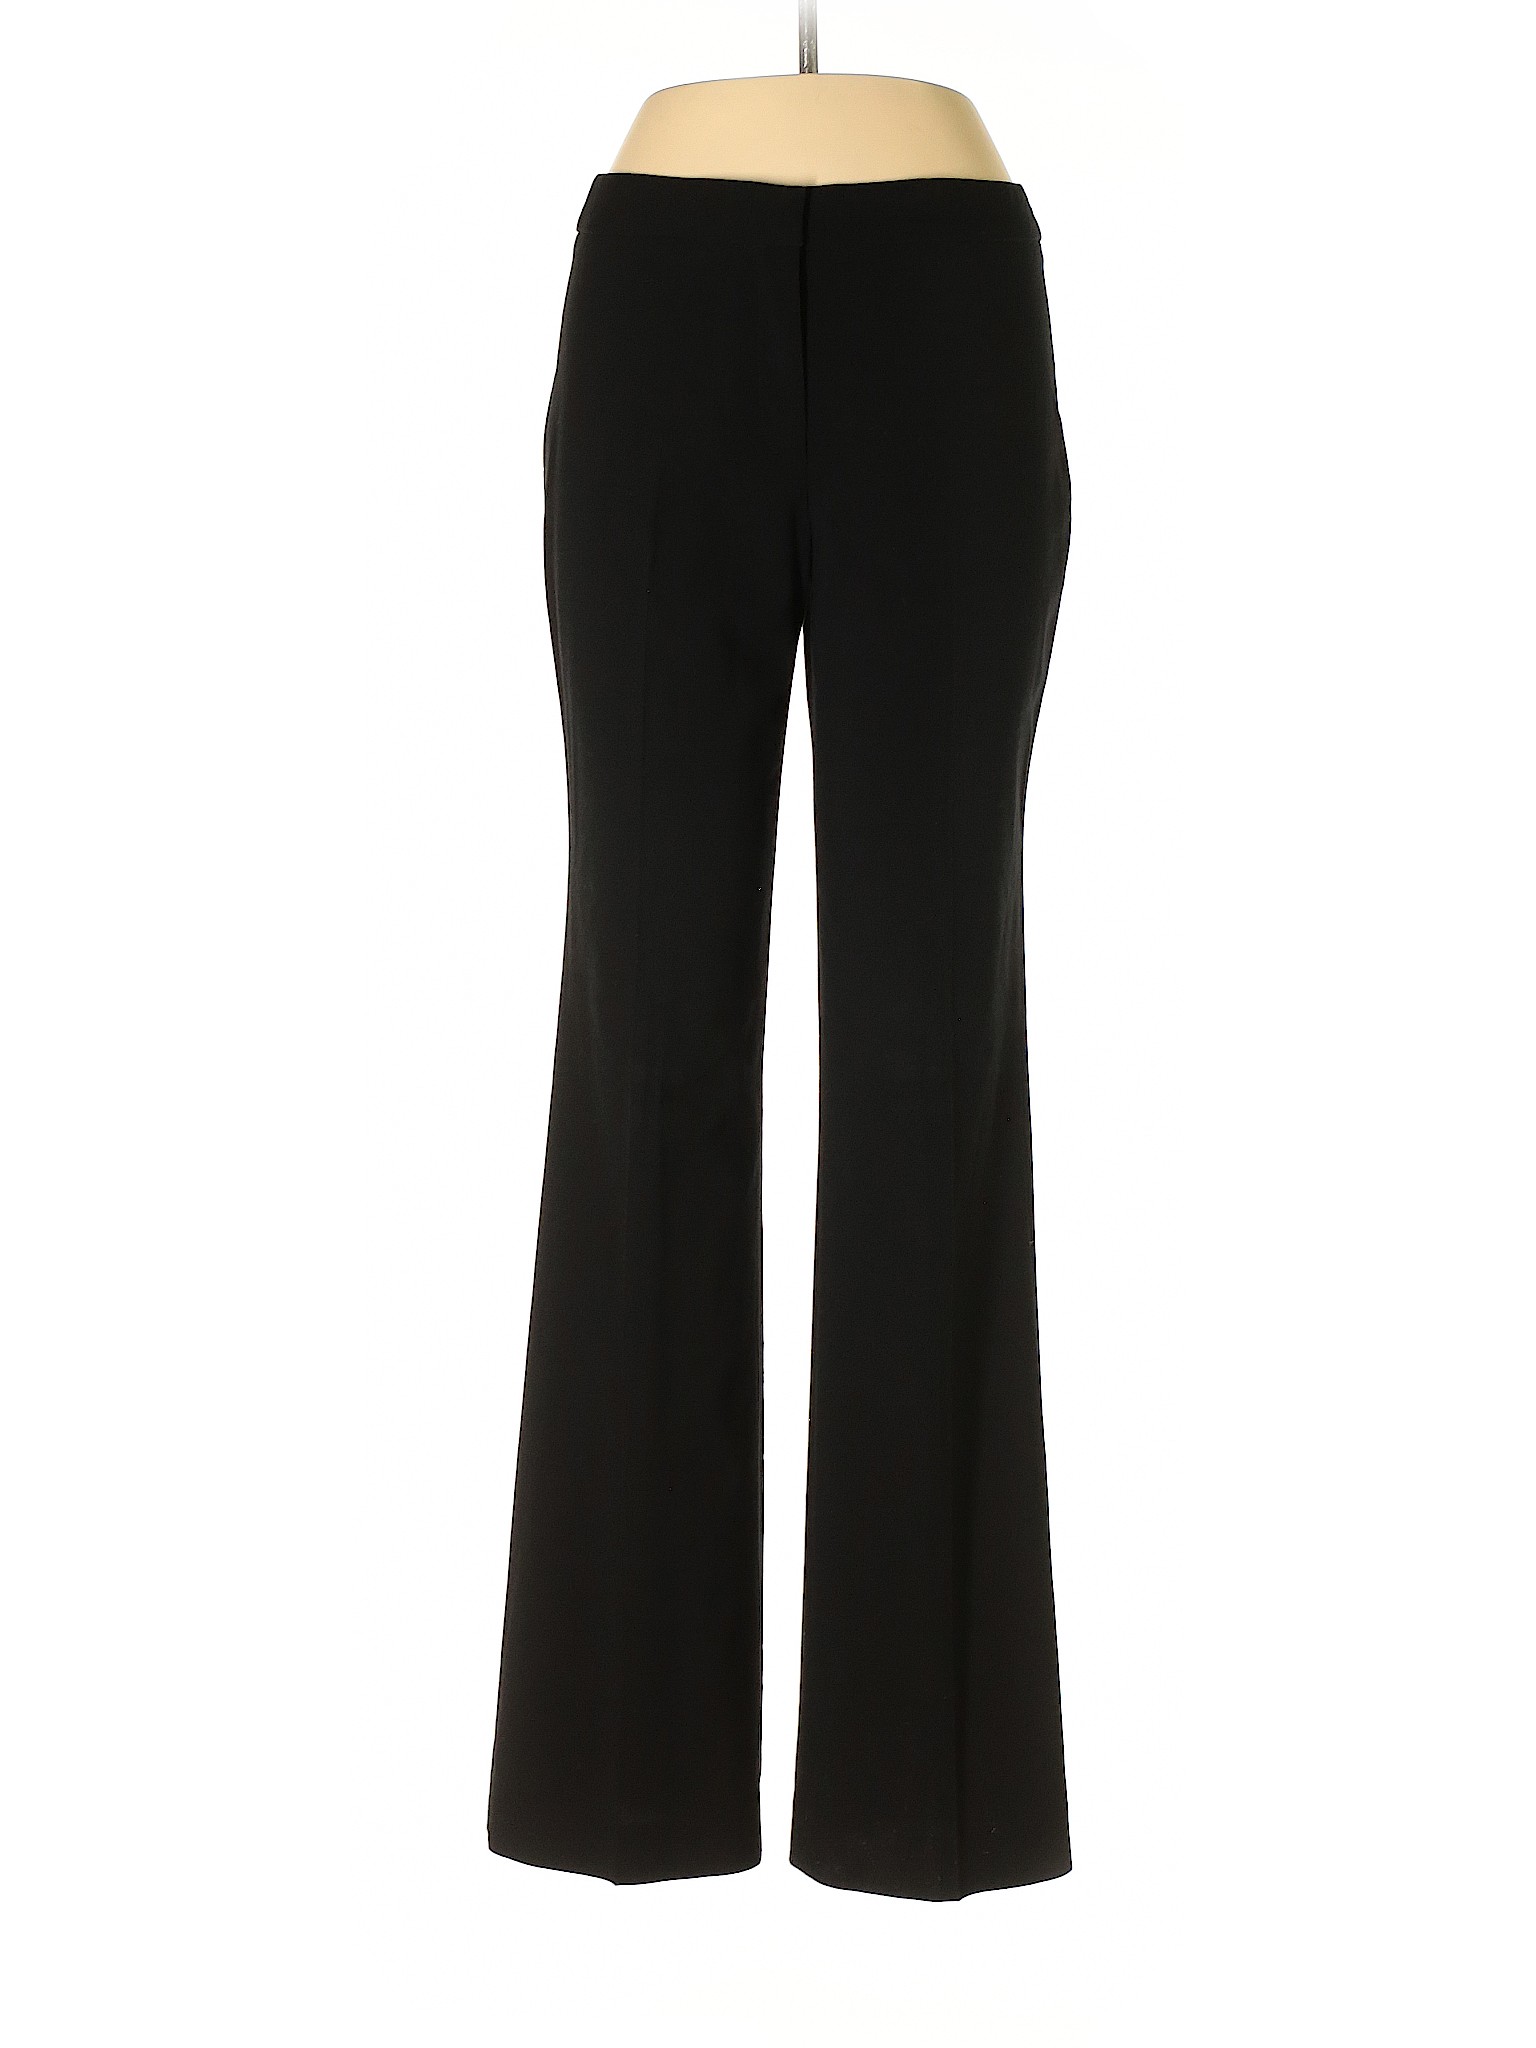 Esprit Women Black Dress Pants 8 | eBay